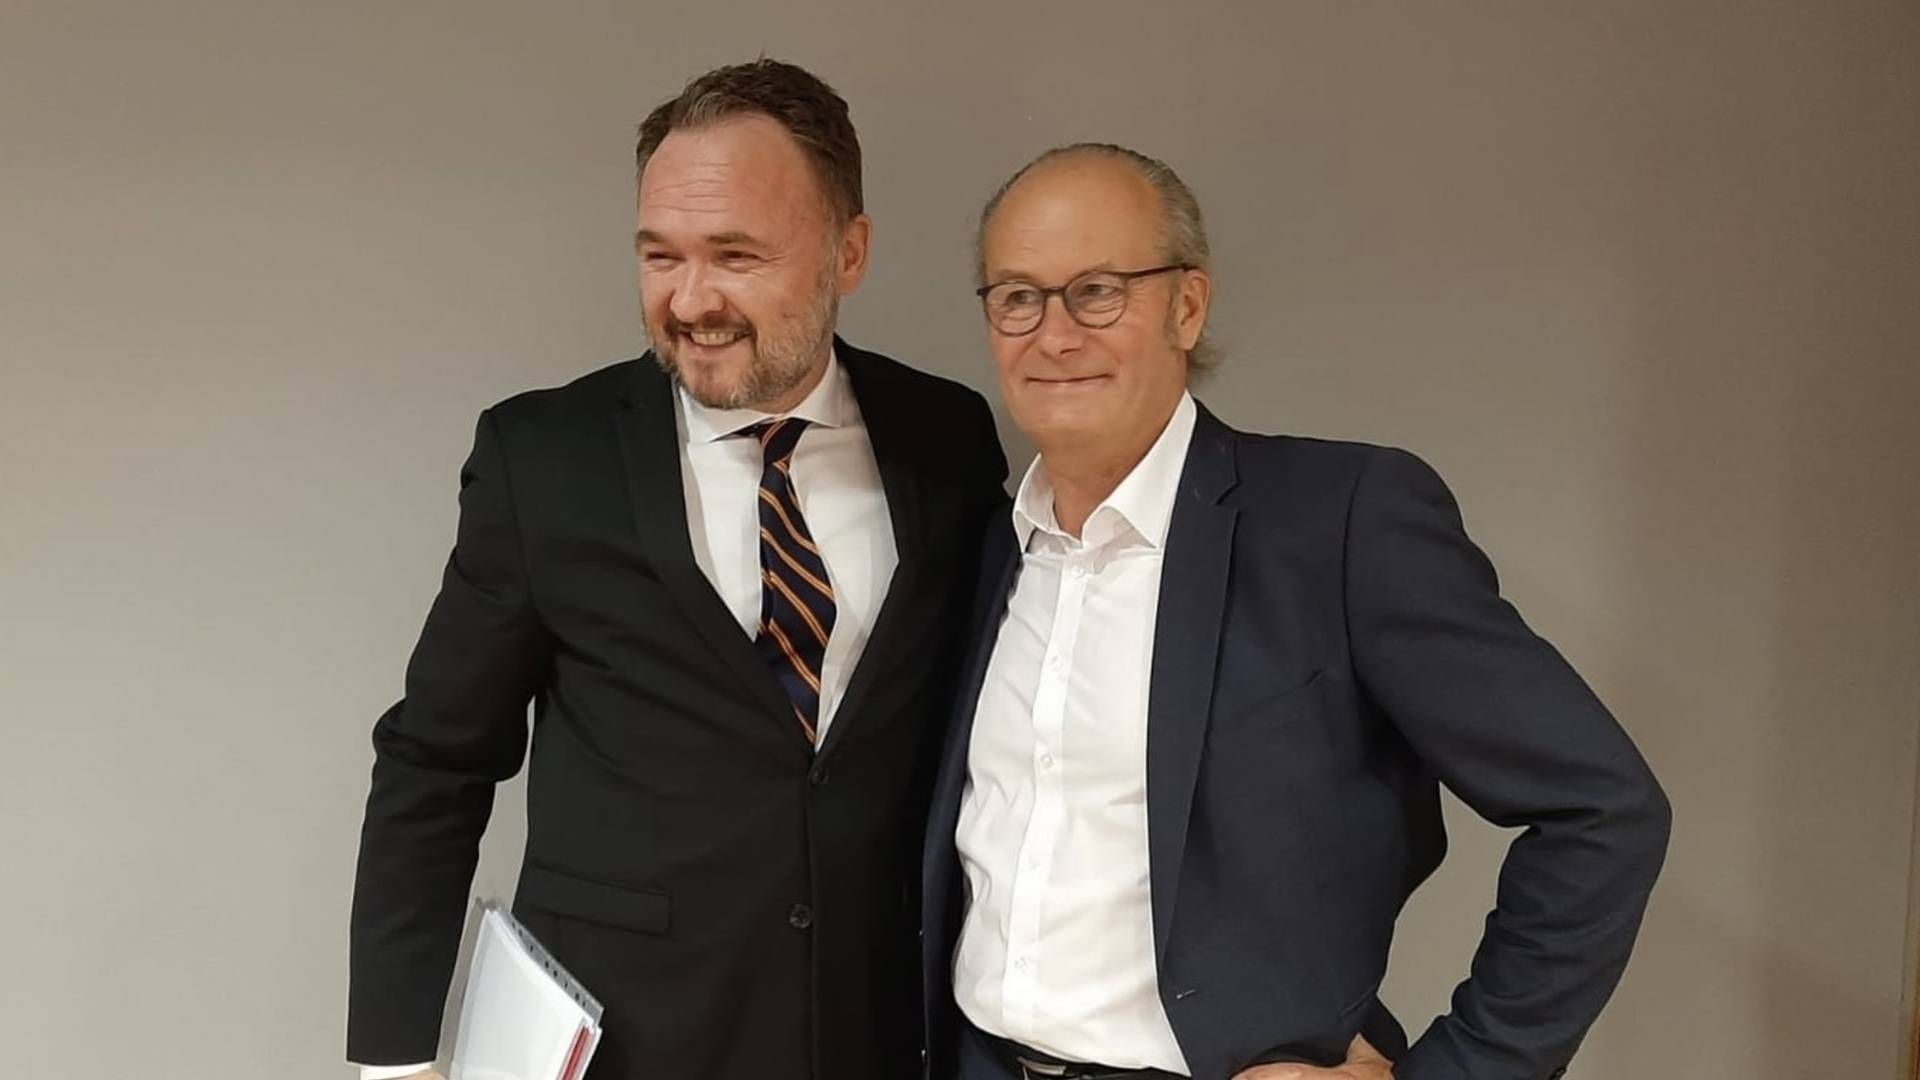 Danmarks energiminister Dan Jørgensen med sin kollega fra Luxembourg, Claude Turmes. | Foto: Le Gouvernement Luxembourgeois